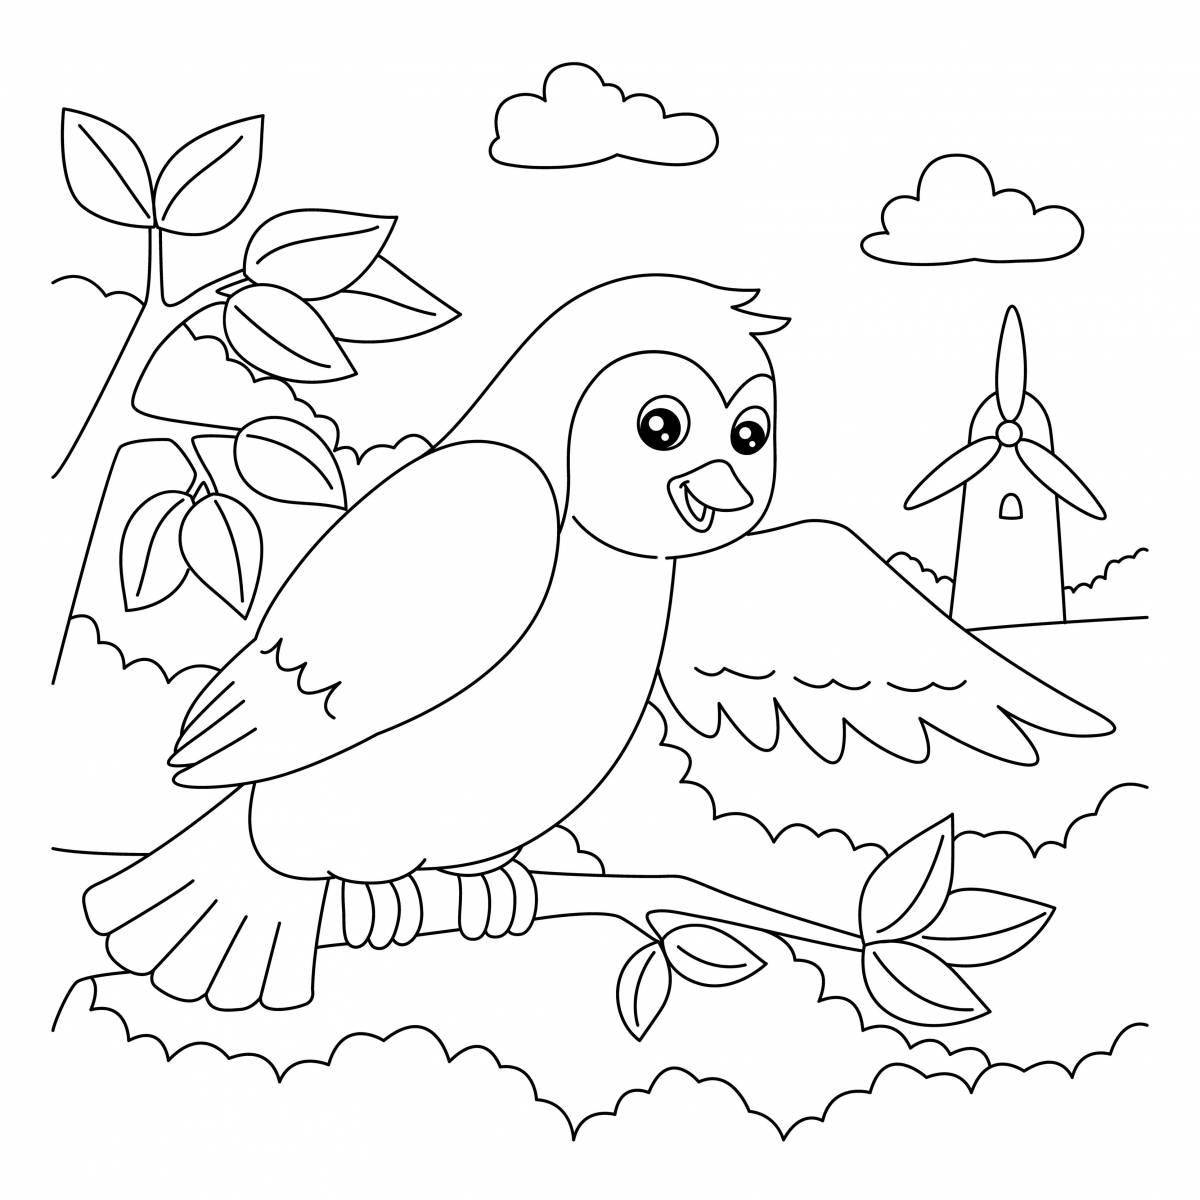 Fun bird coloring book for preschoolers 2-3 years old